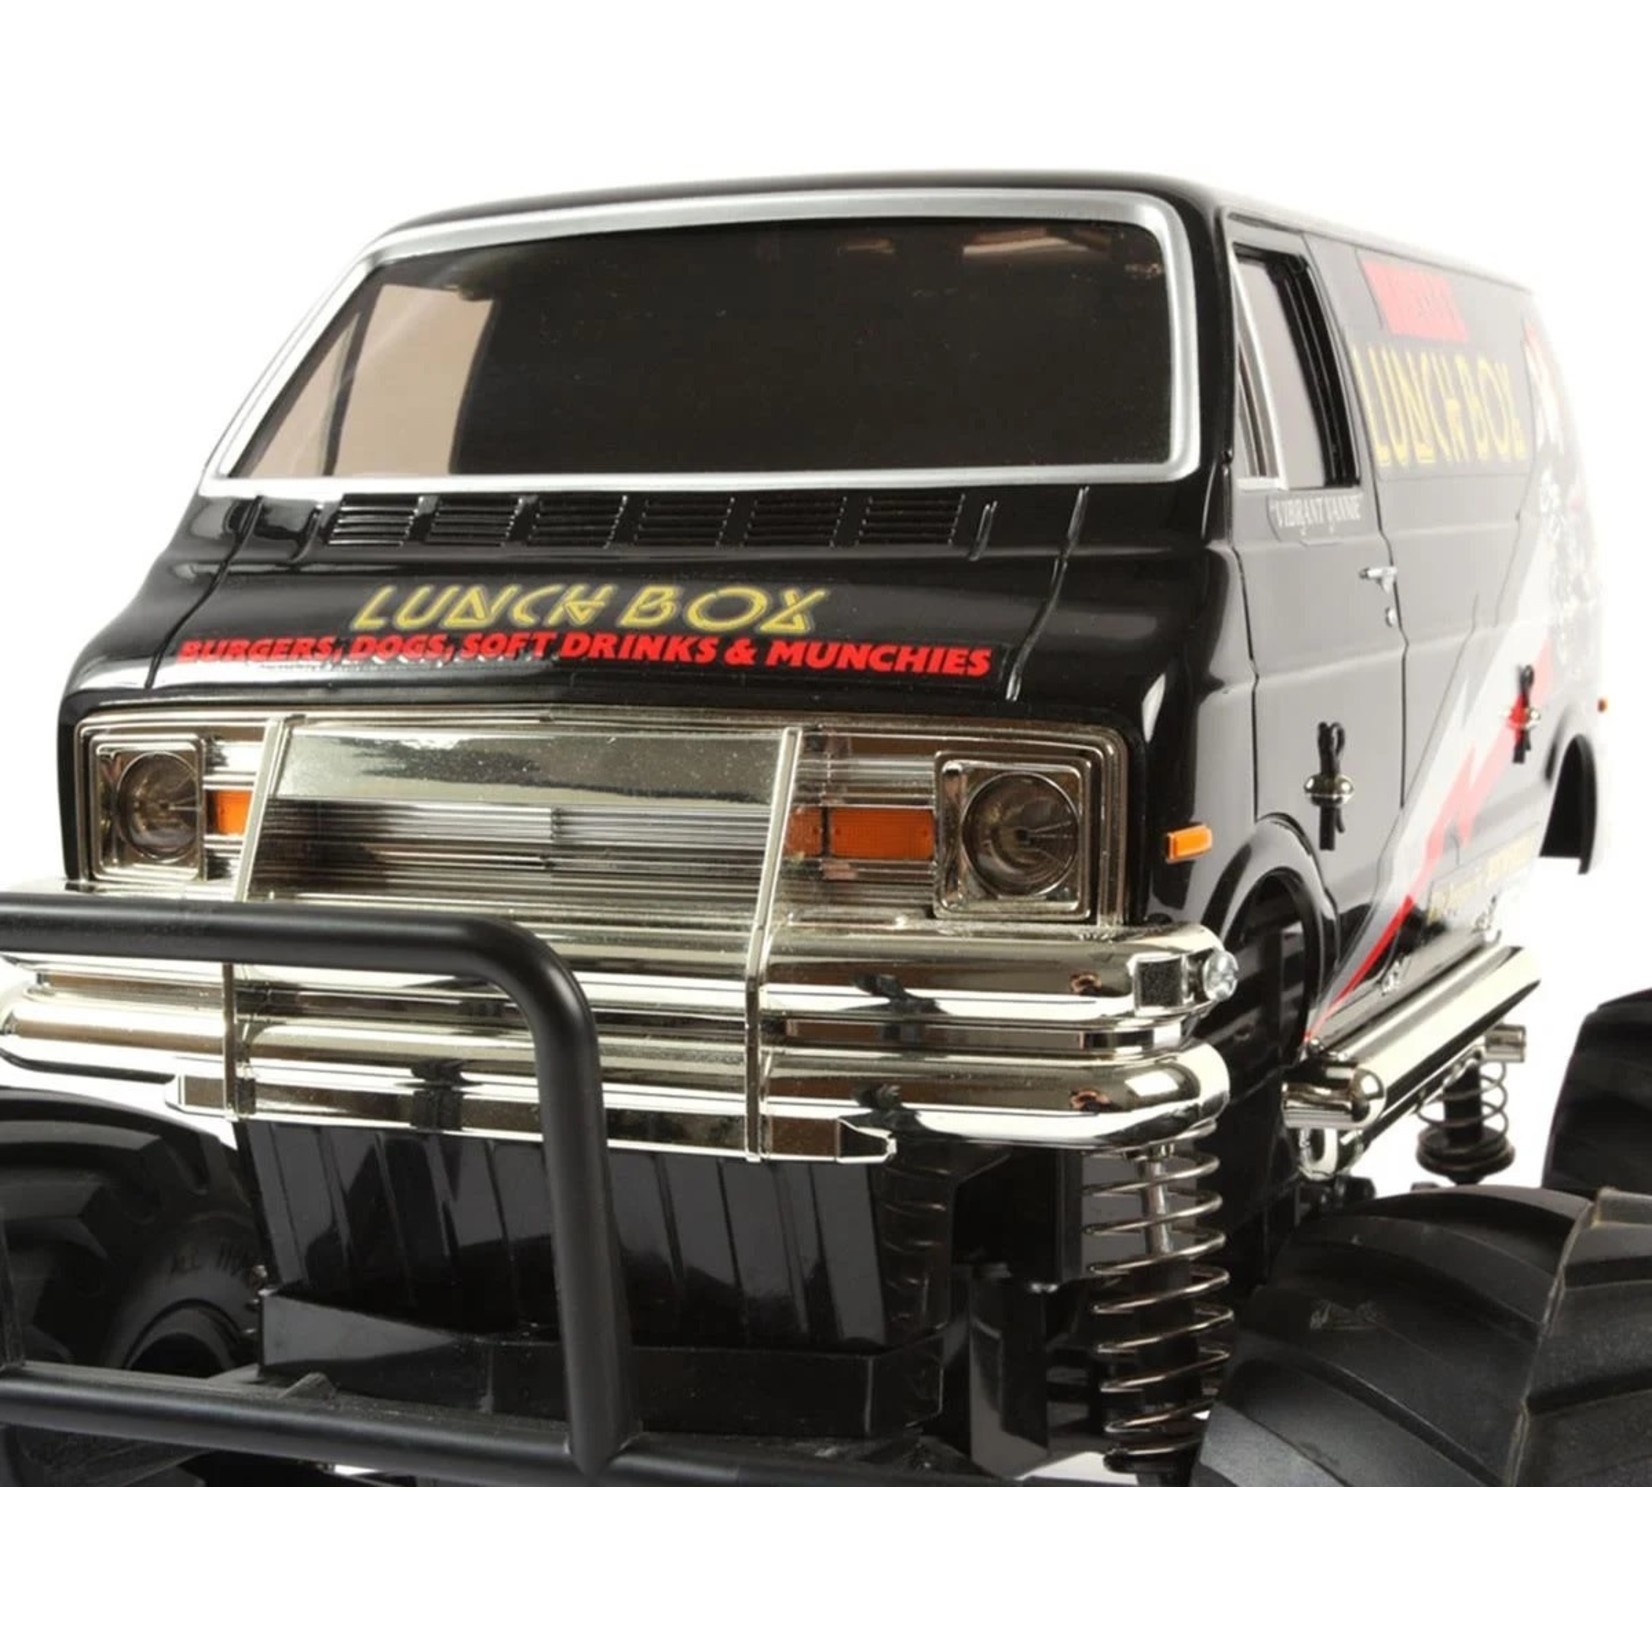 Tamiya Tamiya Lunch Box "Black Edition" 2WD Electric Monster Truck Kit #58546-60A